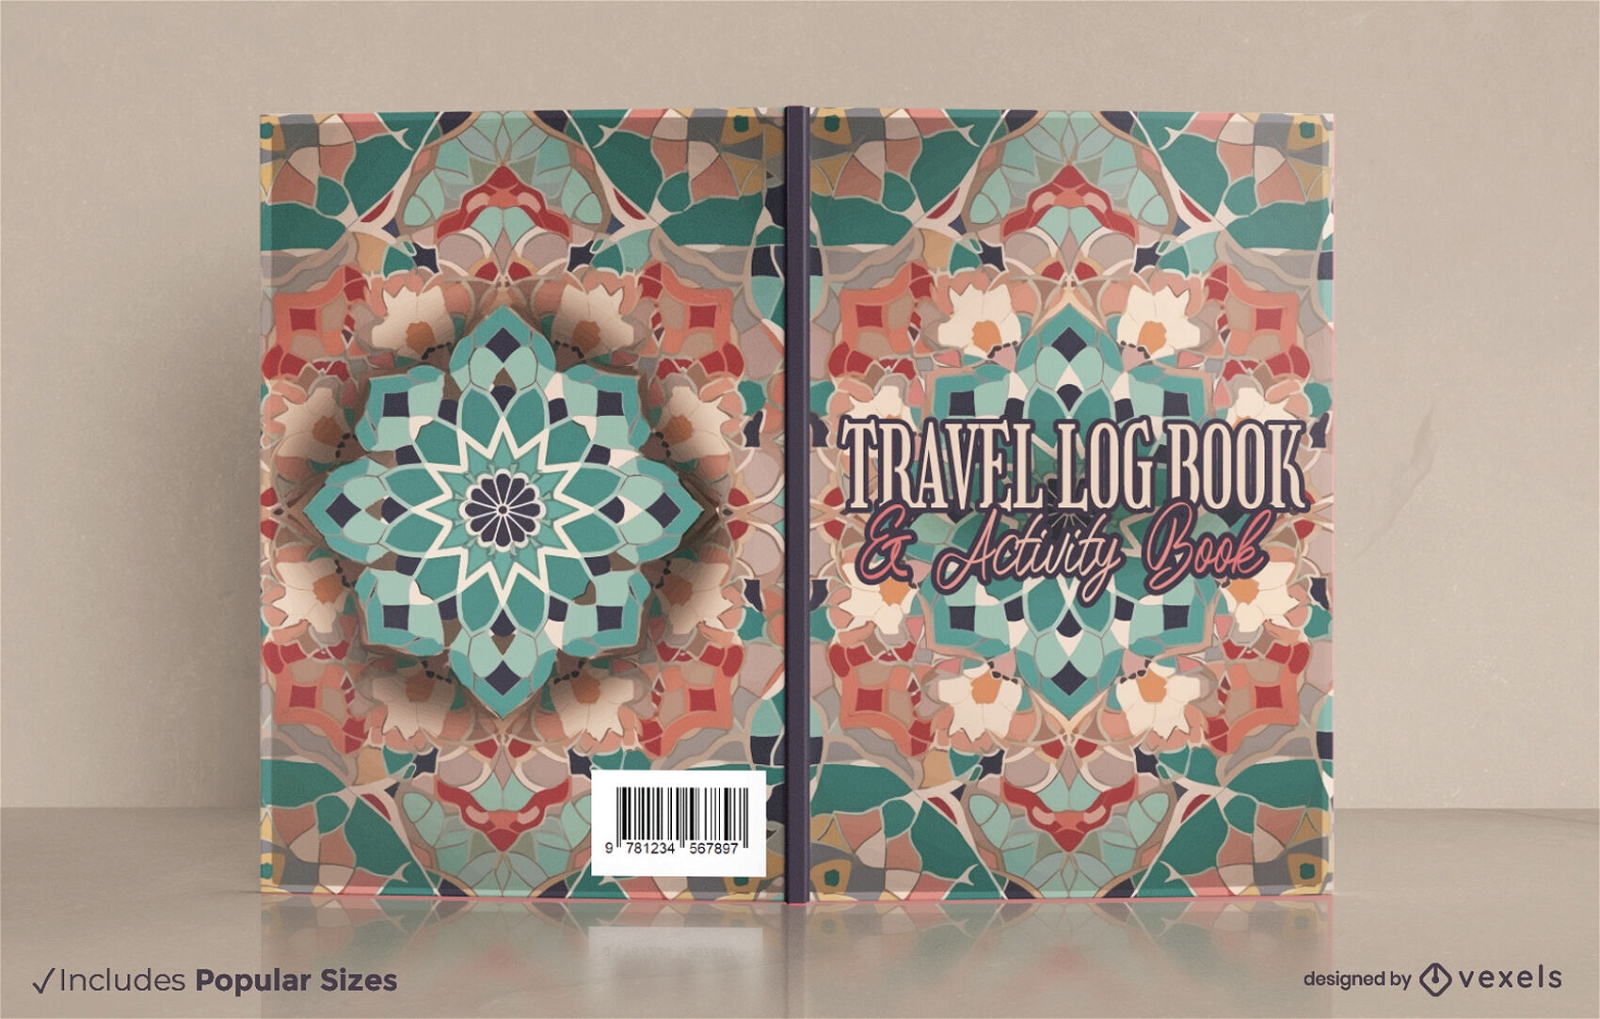 Geometric tile pattern book cover design